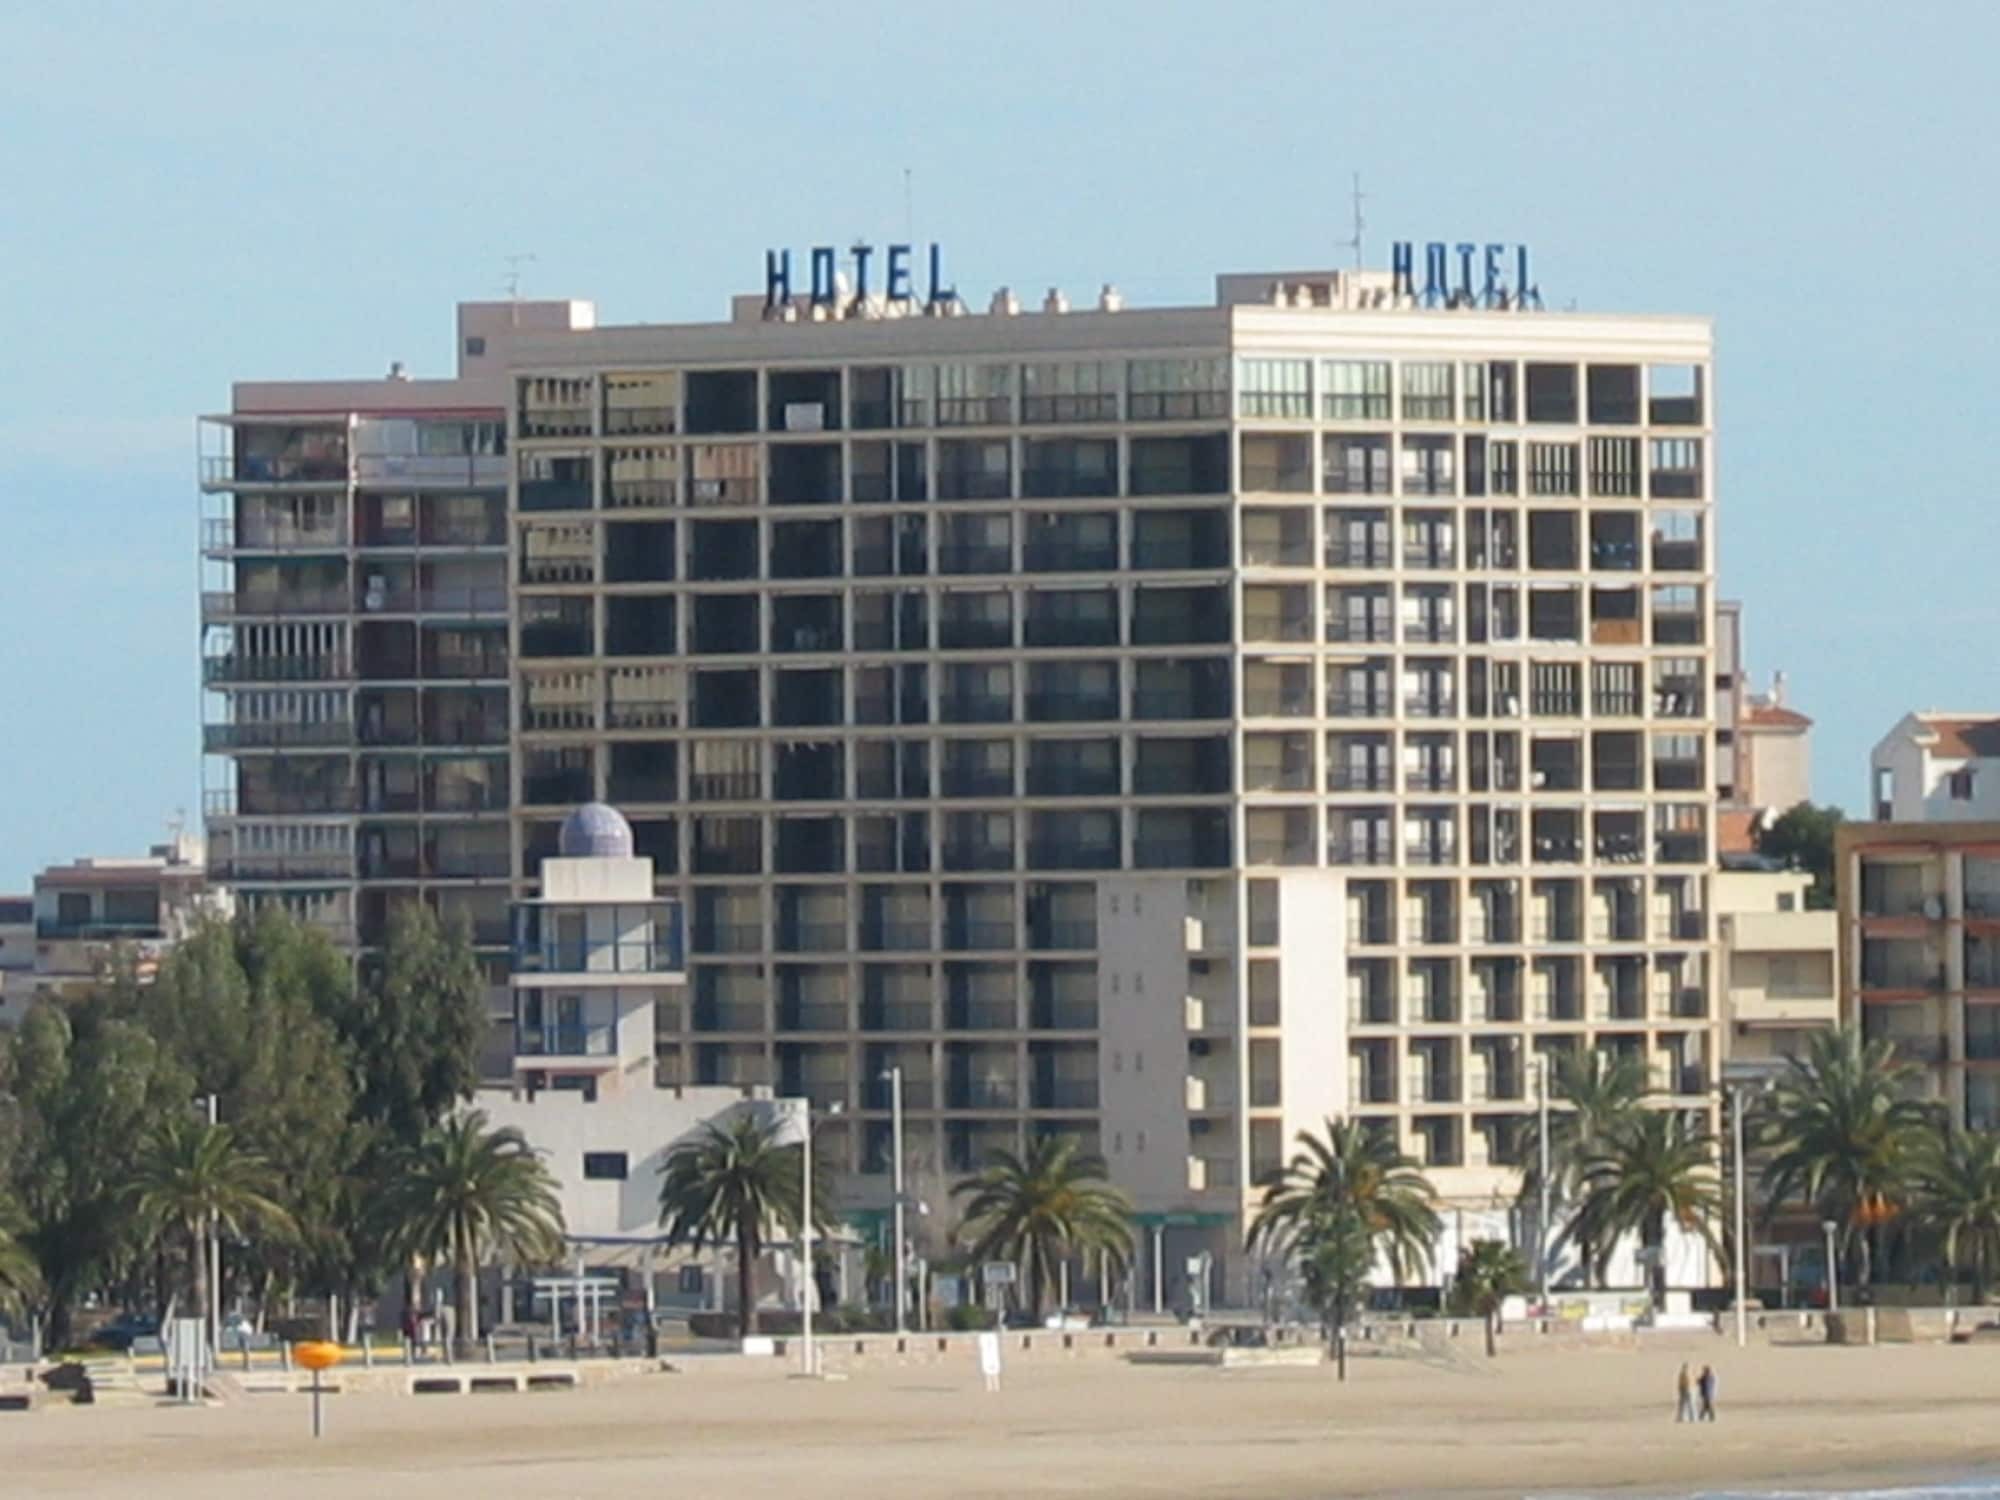 Hotel Neptuno Oropesa del Mar Exterior photo